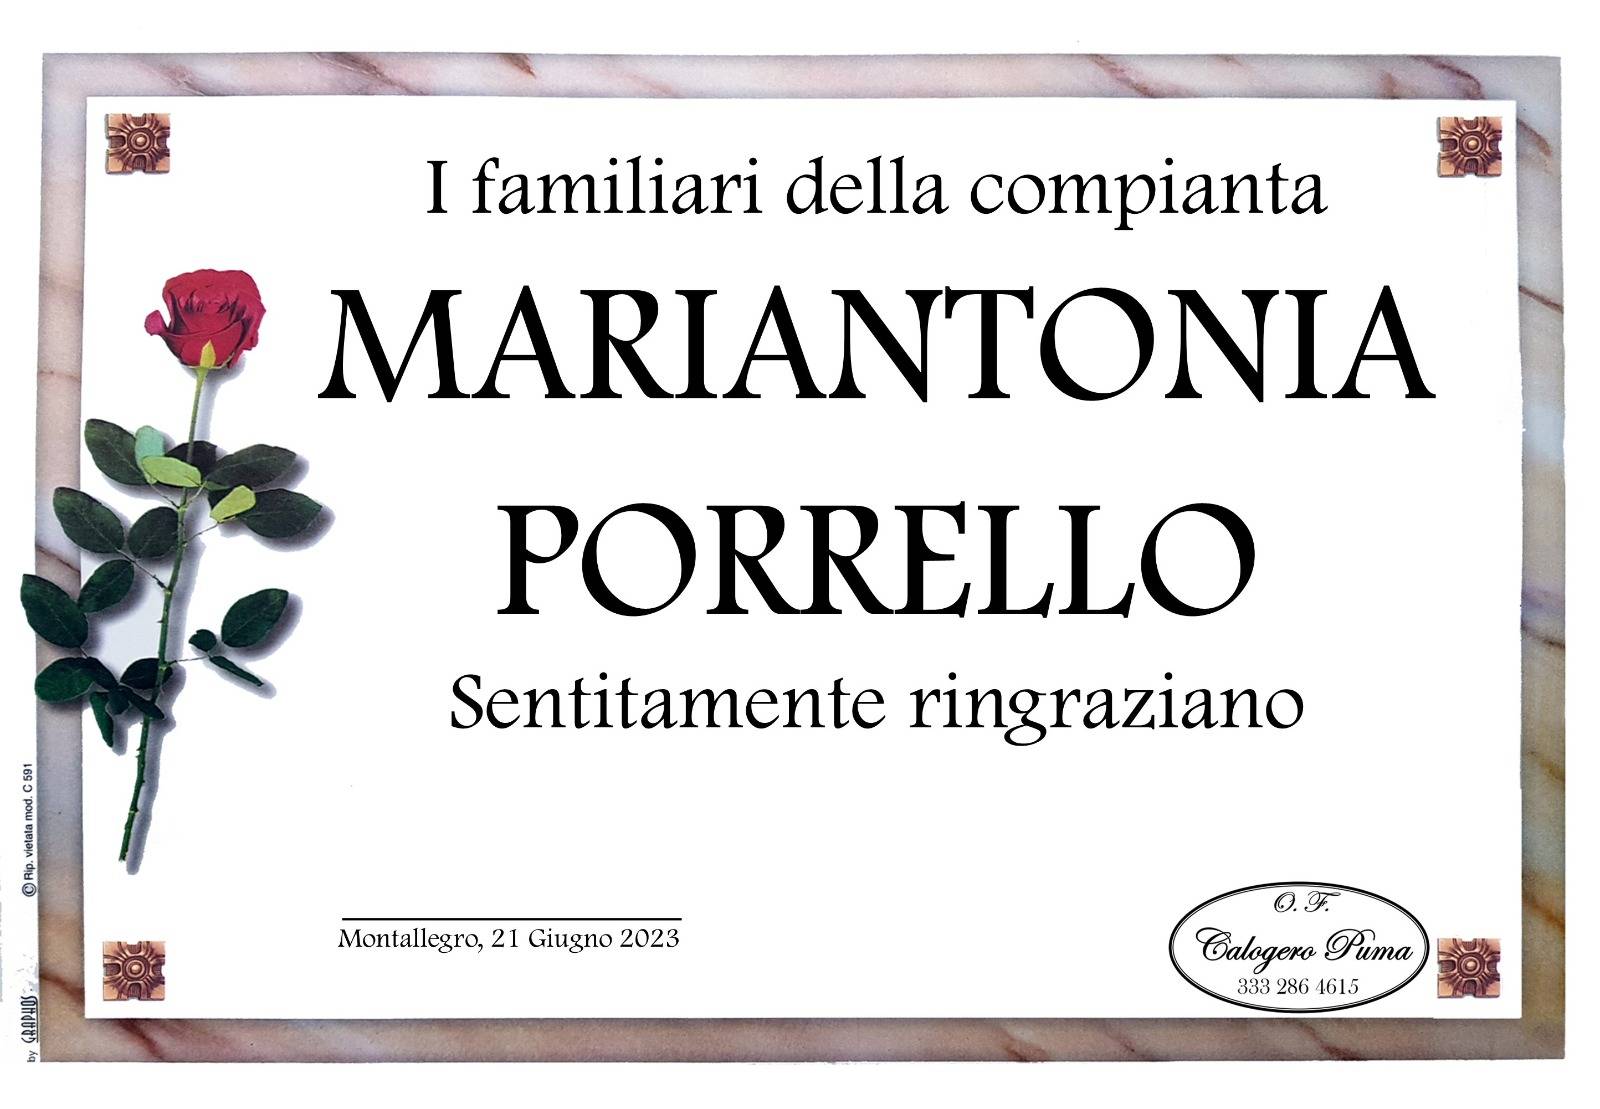 Mariantonia Porrello